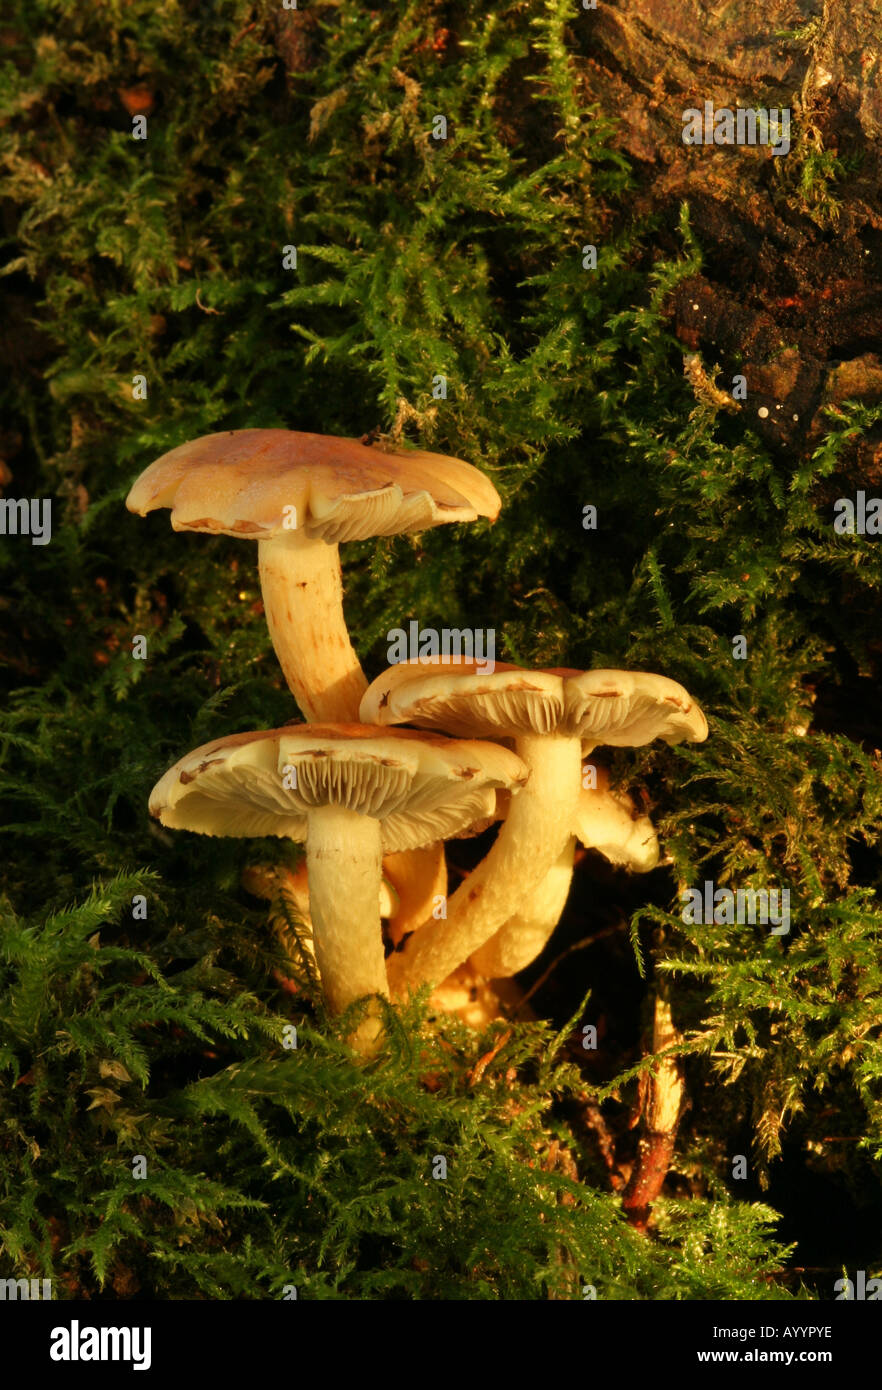 Honey Fungus Armillaria mellea toadstools growing on a mossy tree Stock Photo